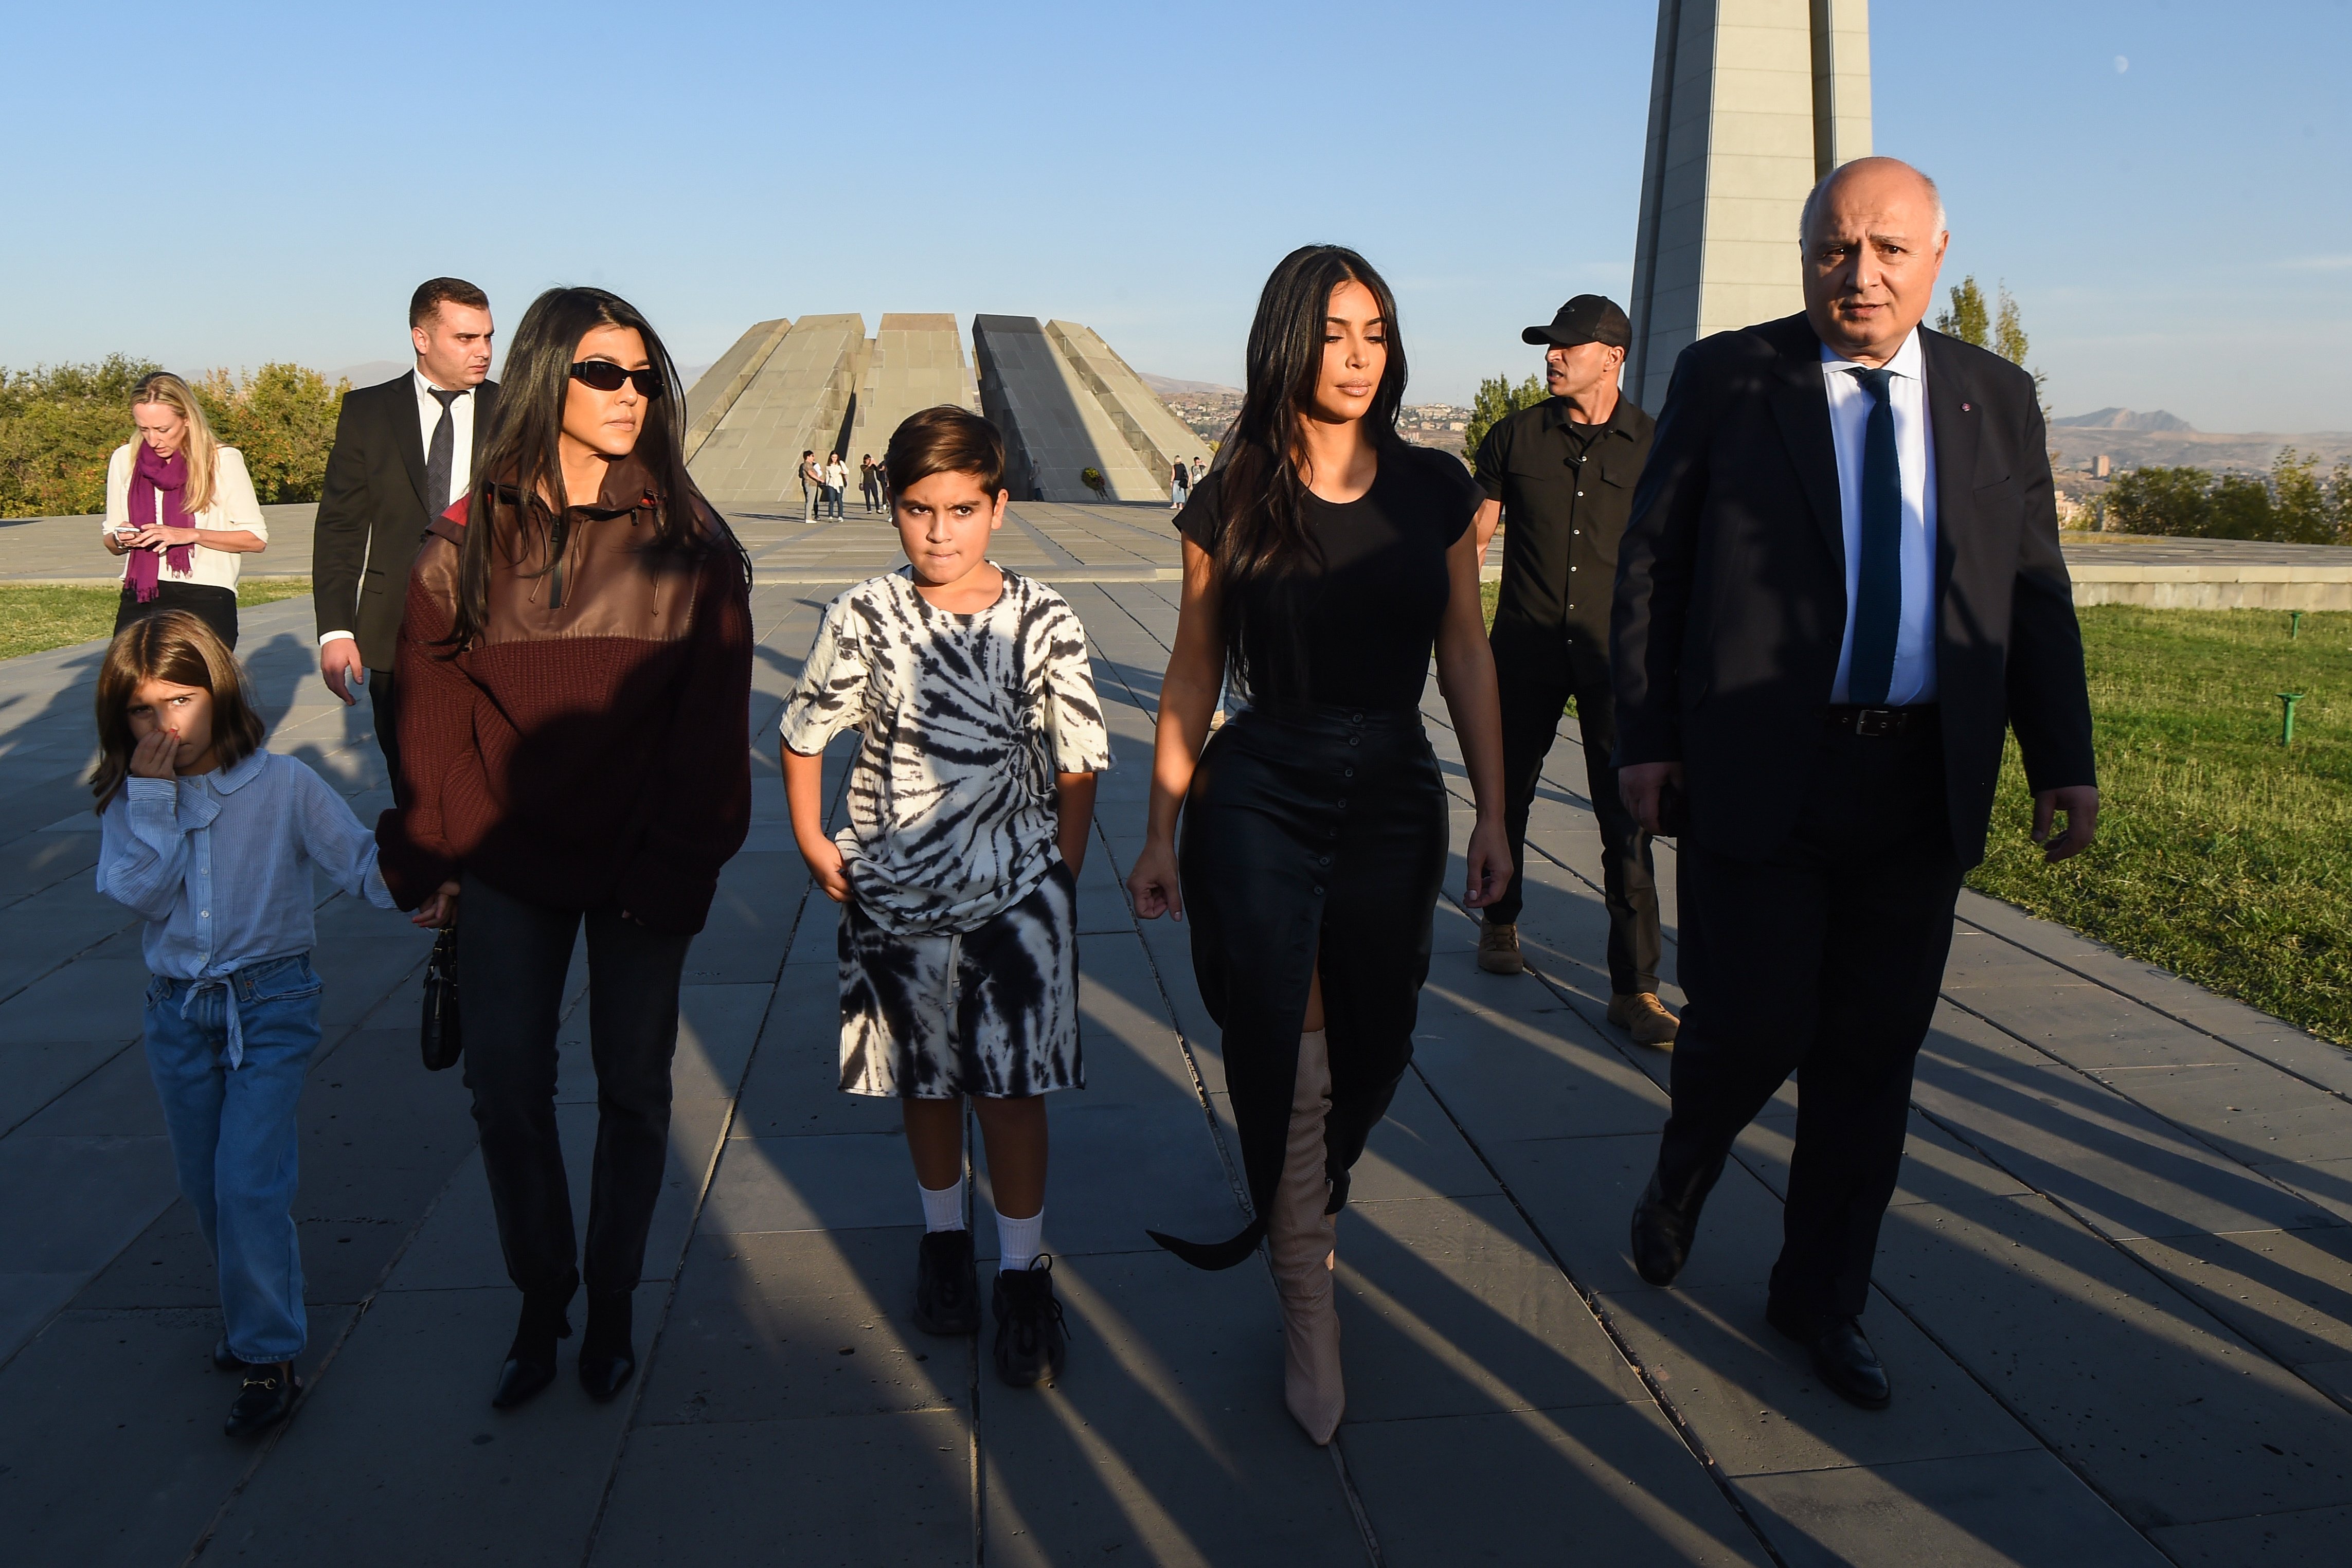 Kourtney Kardashian, Kim Kardashian, and children pictured in Armenia in 2019. | Photo: Getty Images